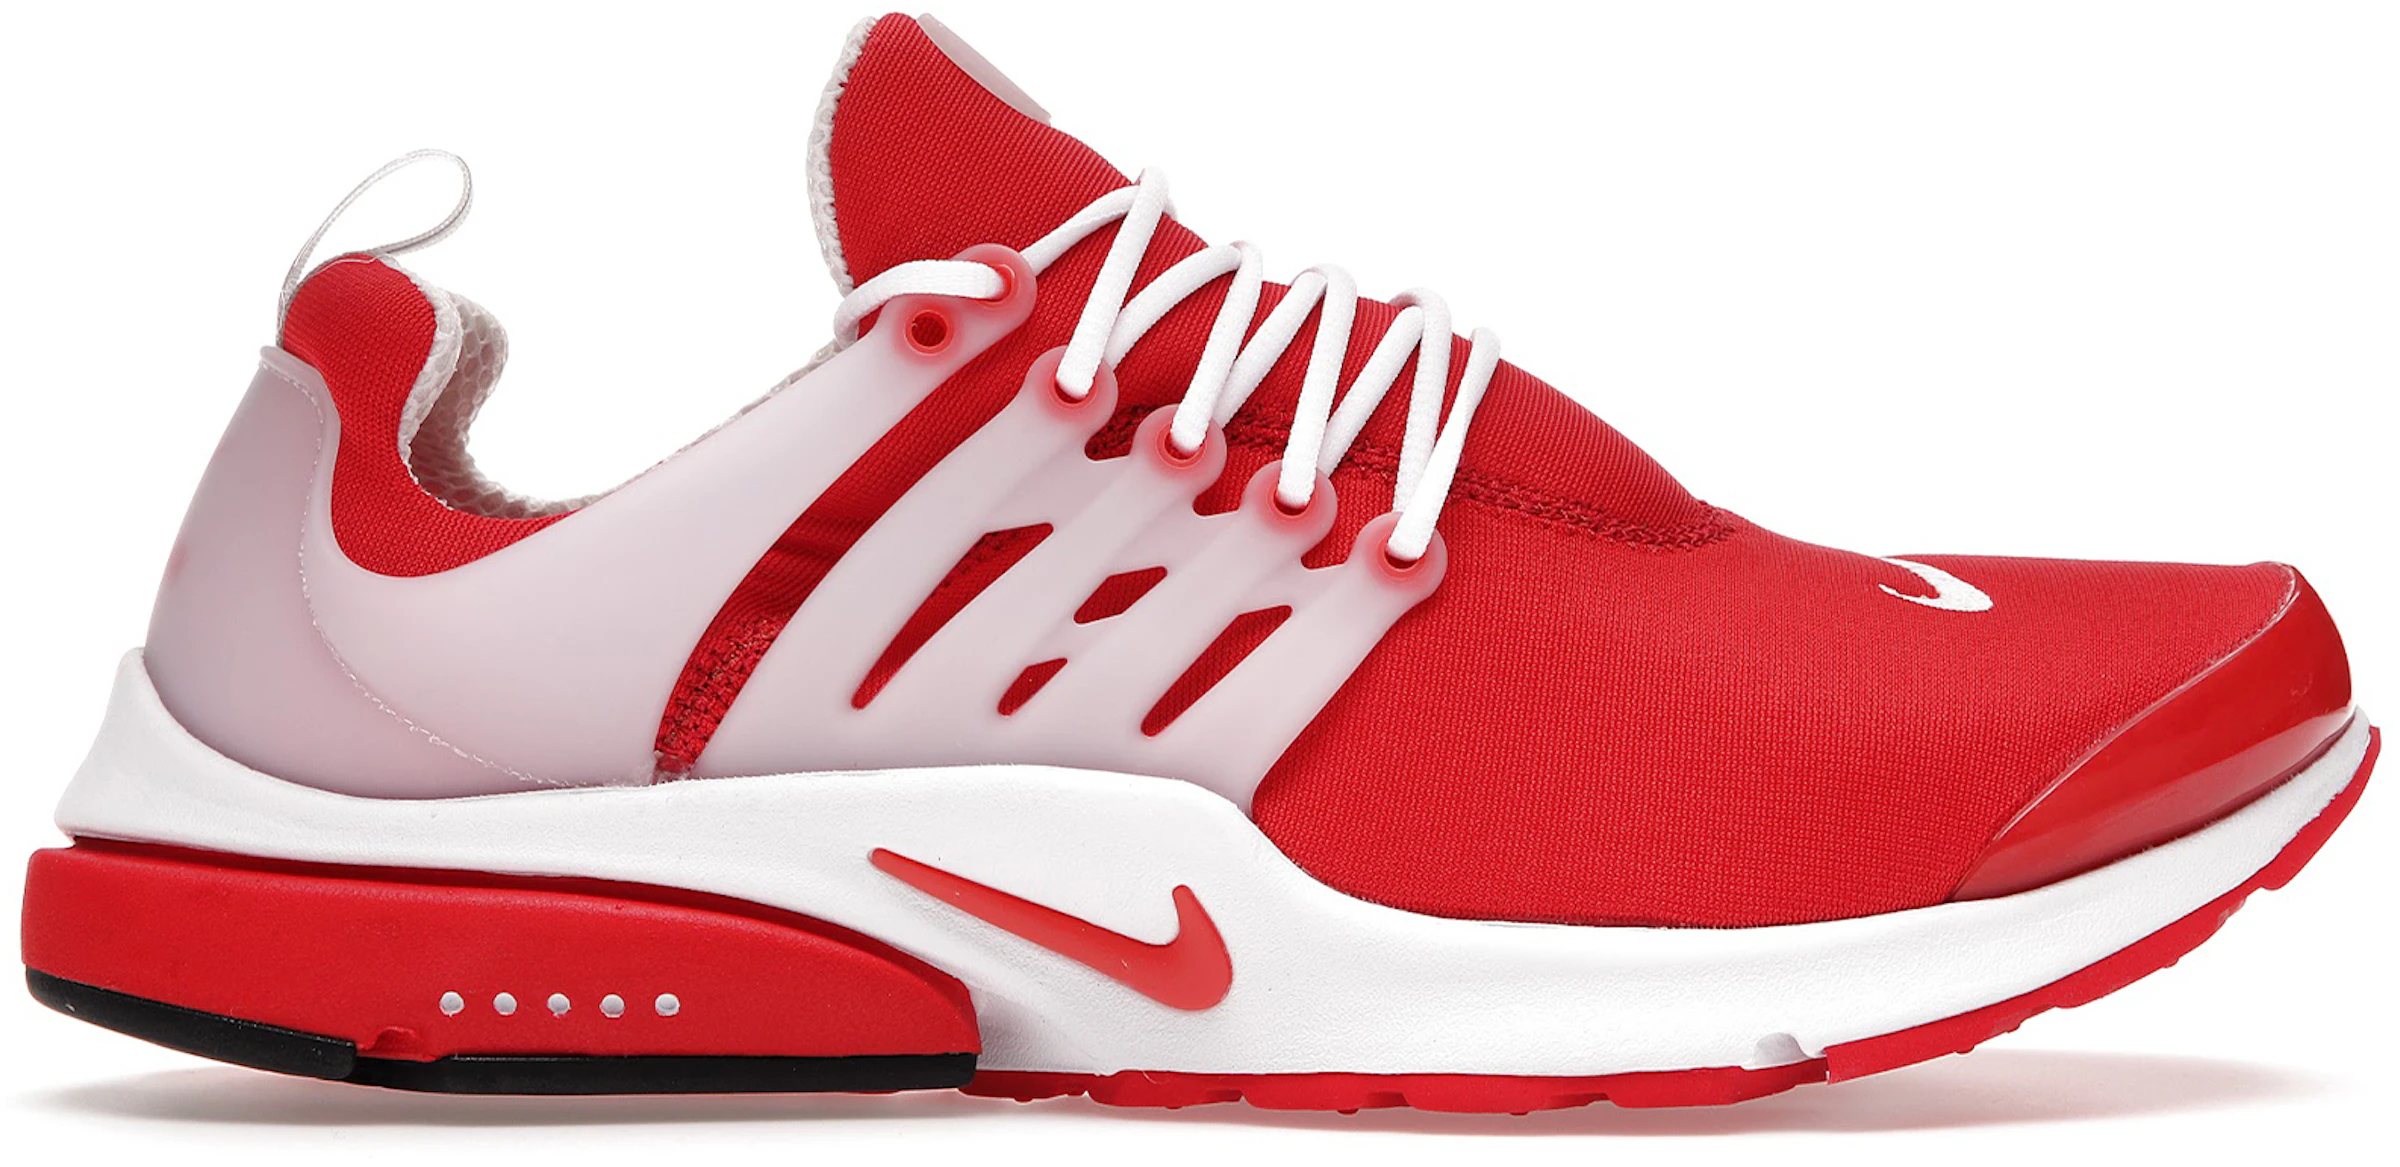 Nike Air Presto Red (2020) - 305919-611 -